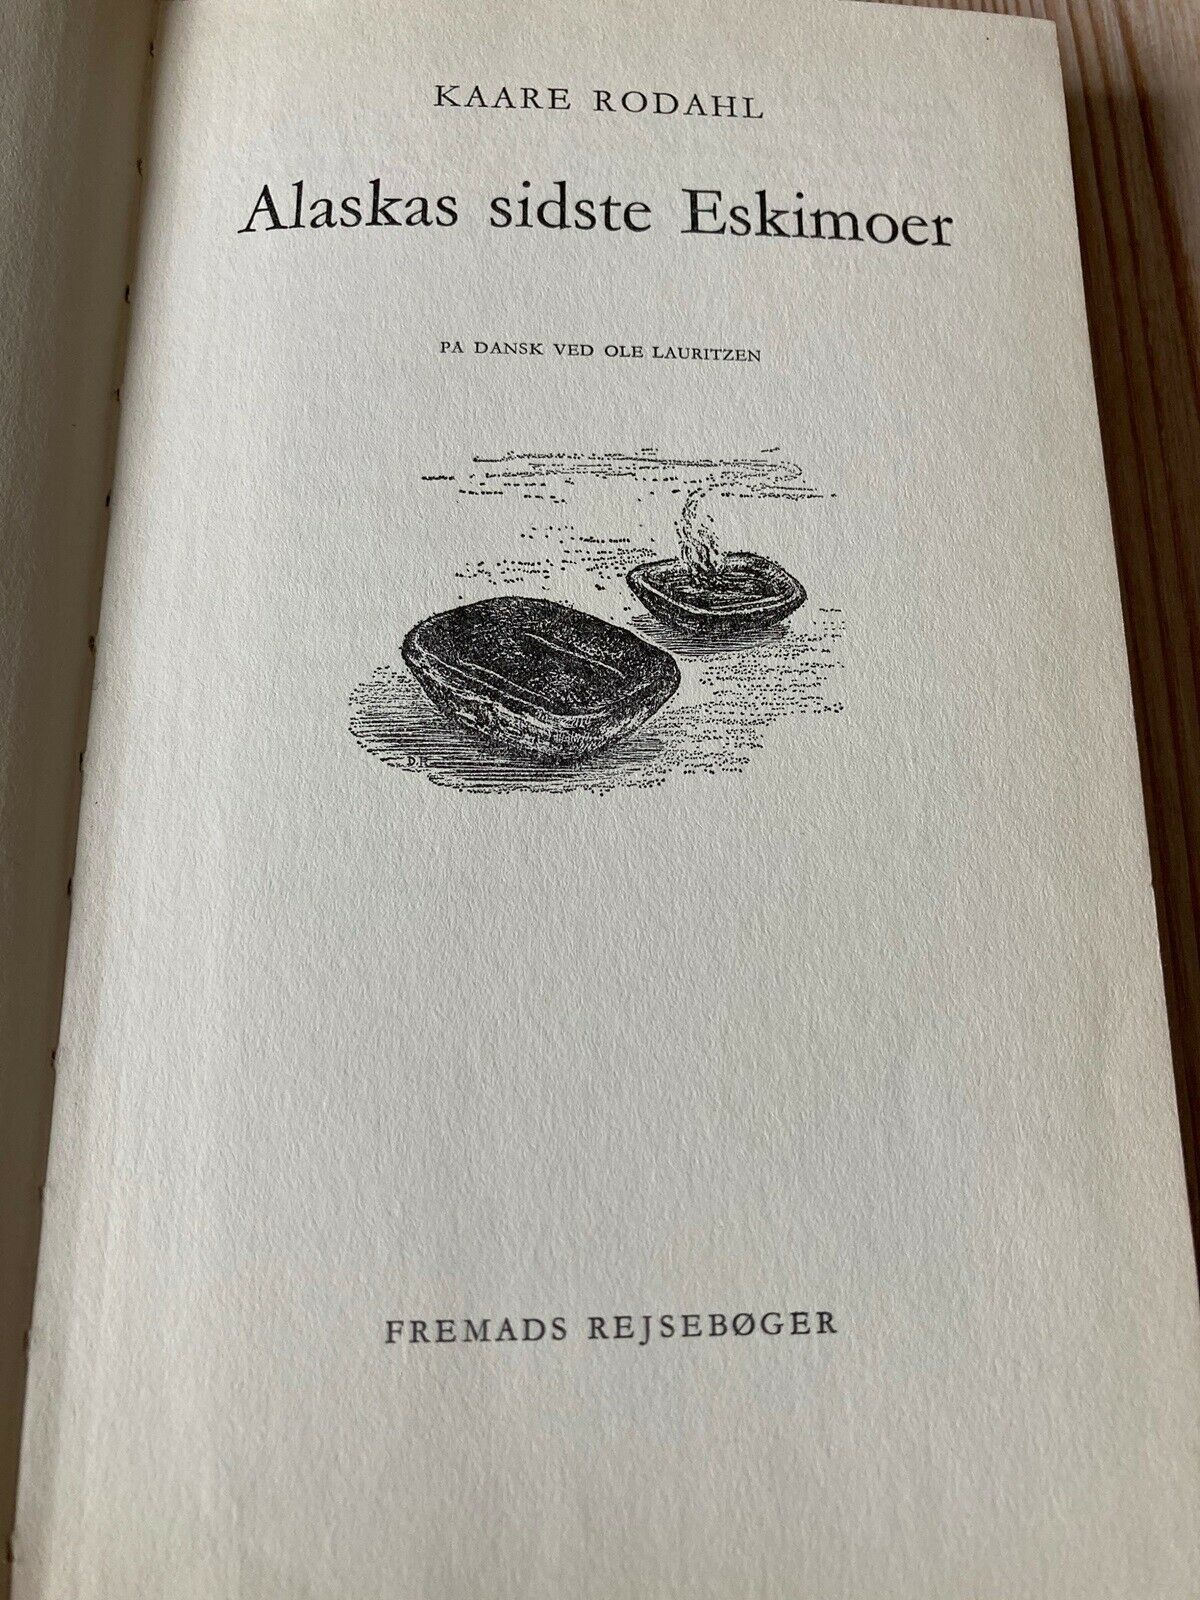 Alaskas sidste eskimoer, Kaare Rodahl, genre: roman